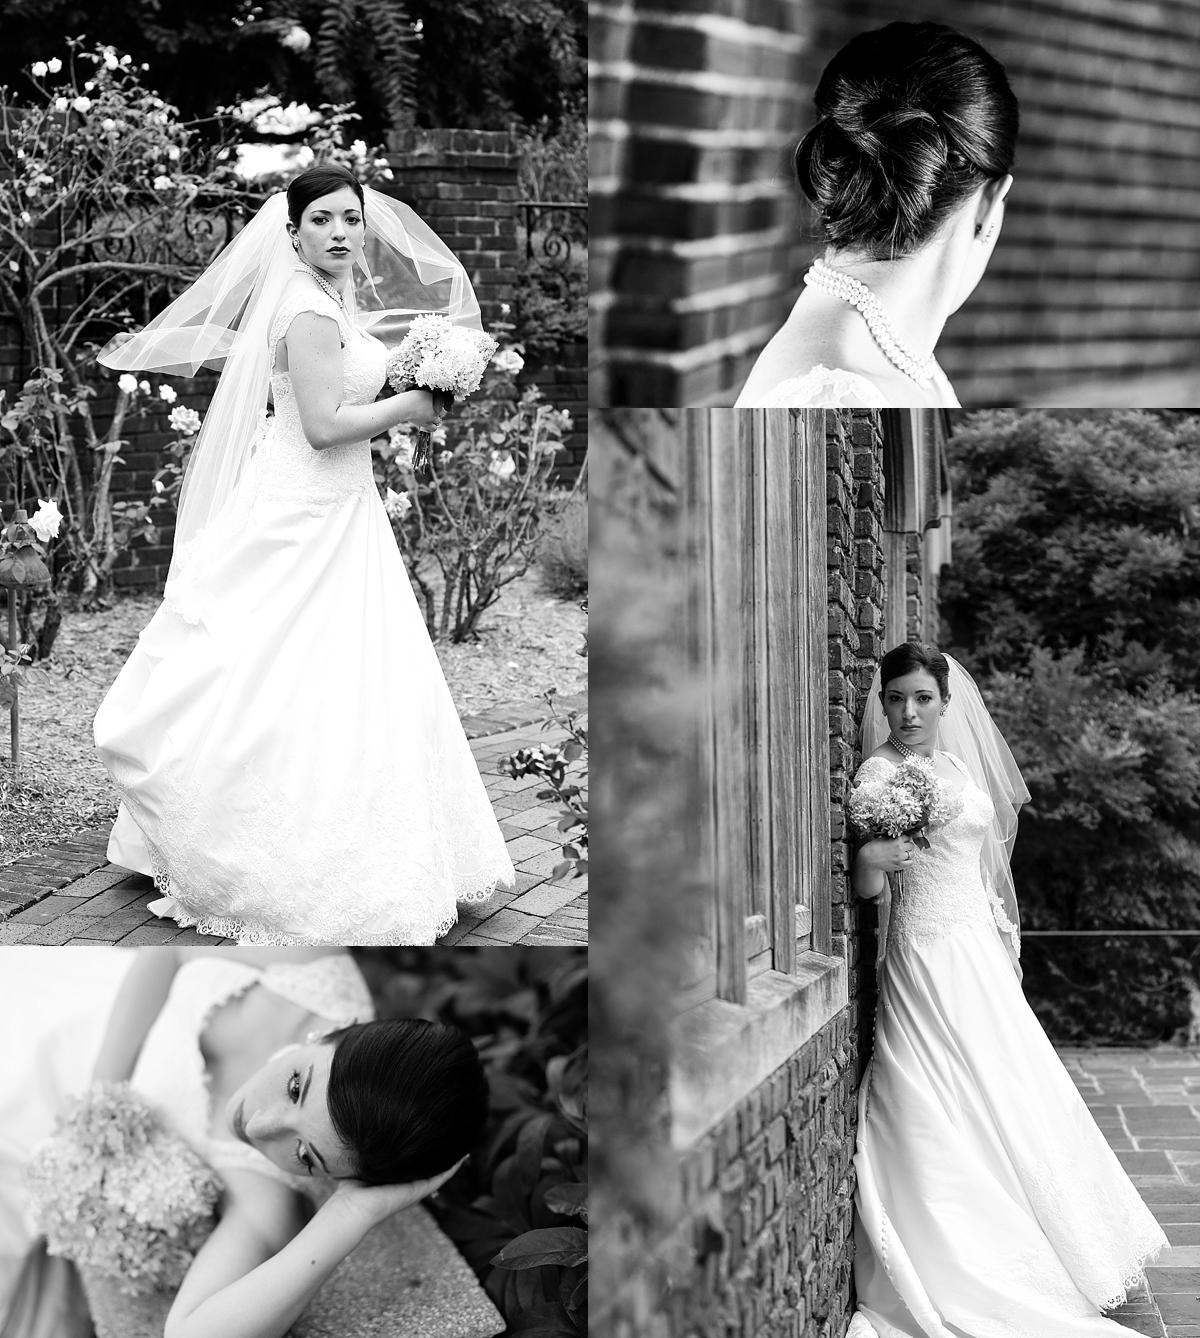 Hermitage Museum Wedding Photographer | Sydney Bridal Session!